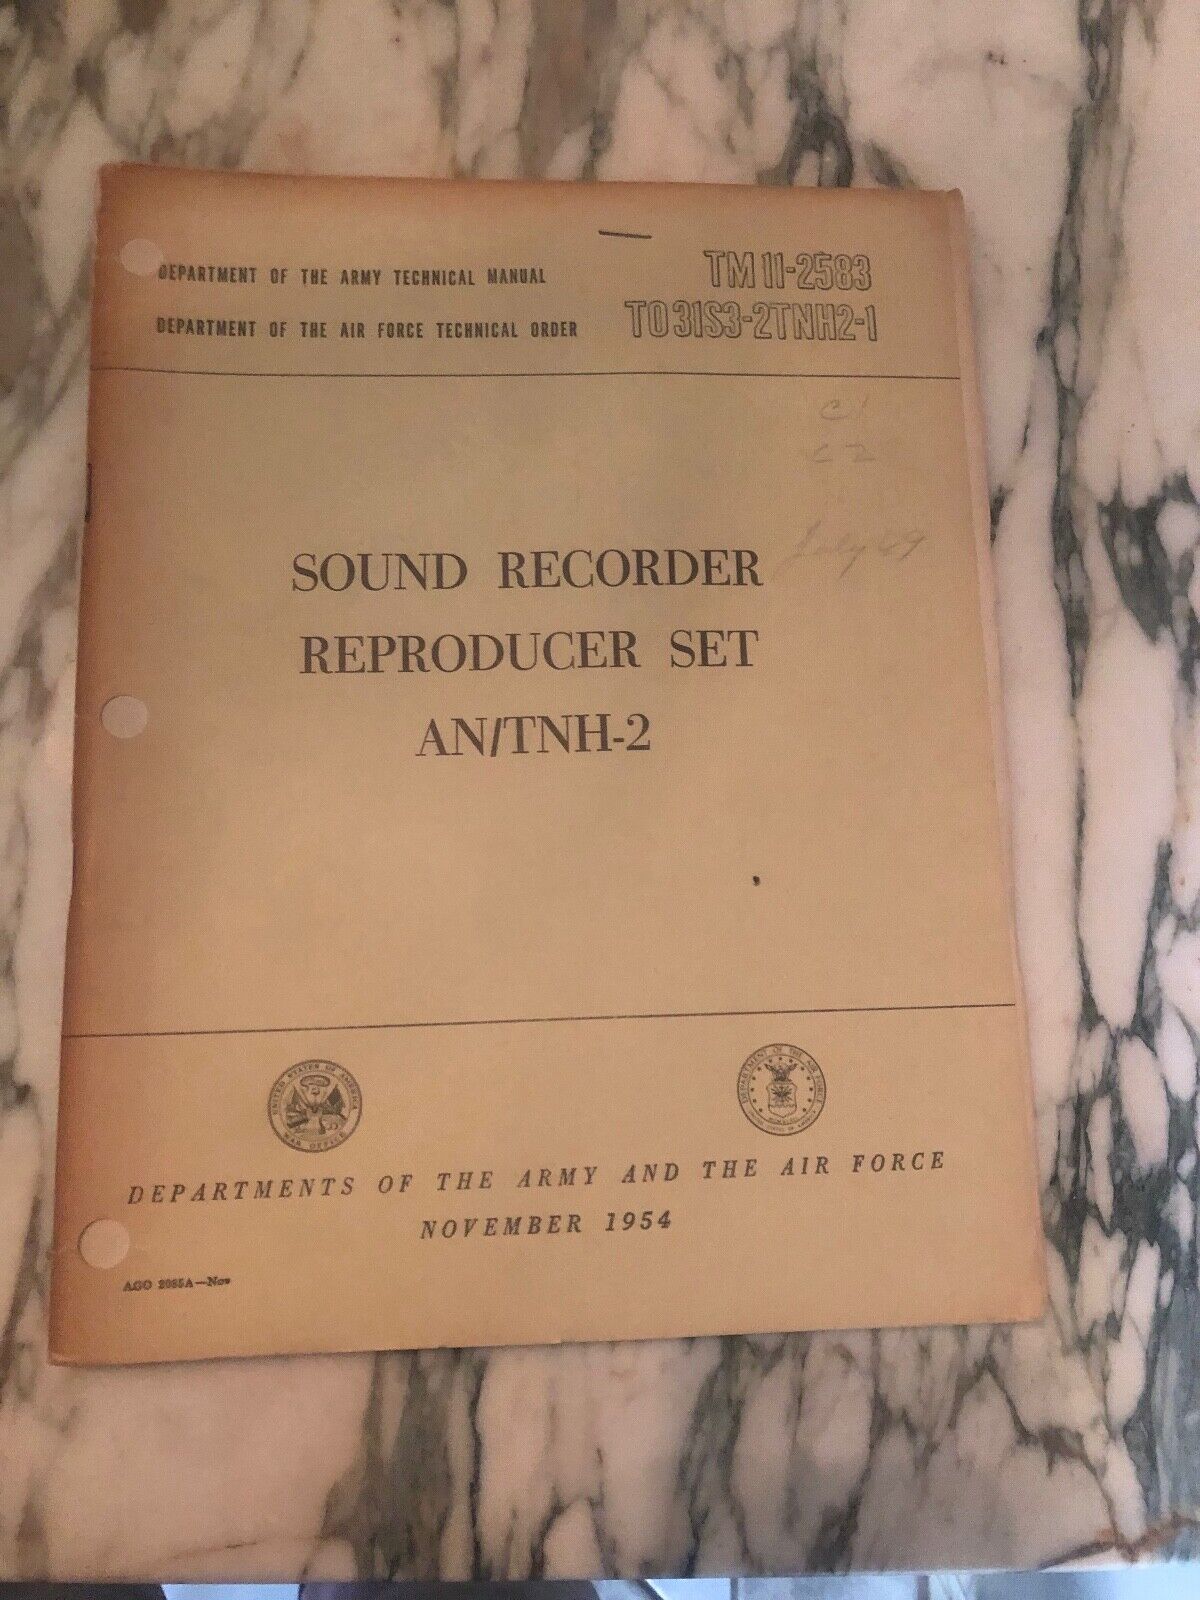 Dept Of Army Sound Recorder Reproducer Set An/tnh-2 Tm 11-2583 Nov 1954 Guide